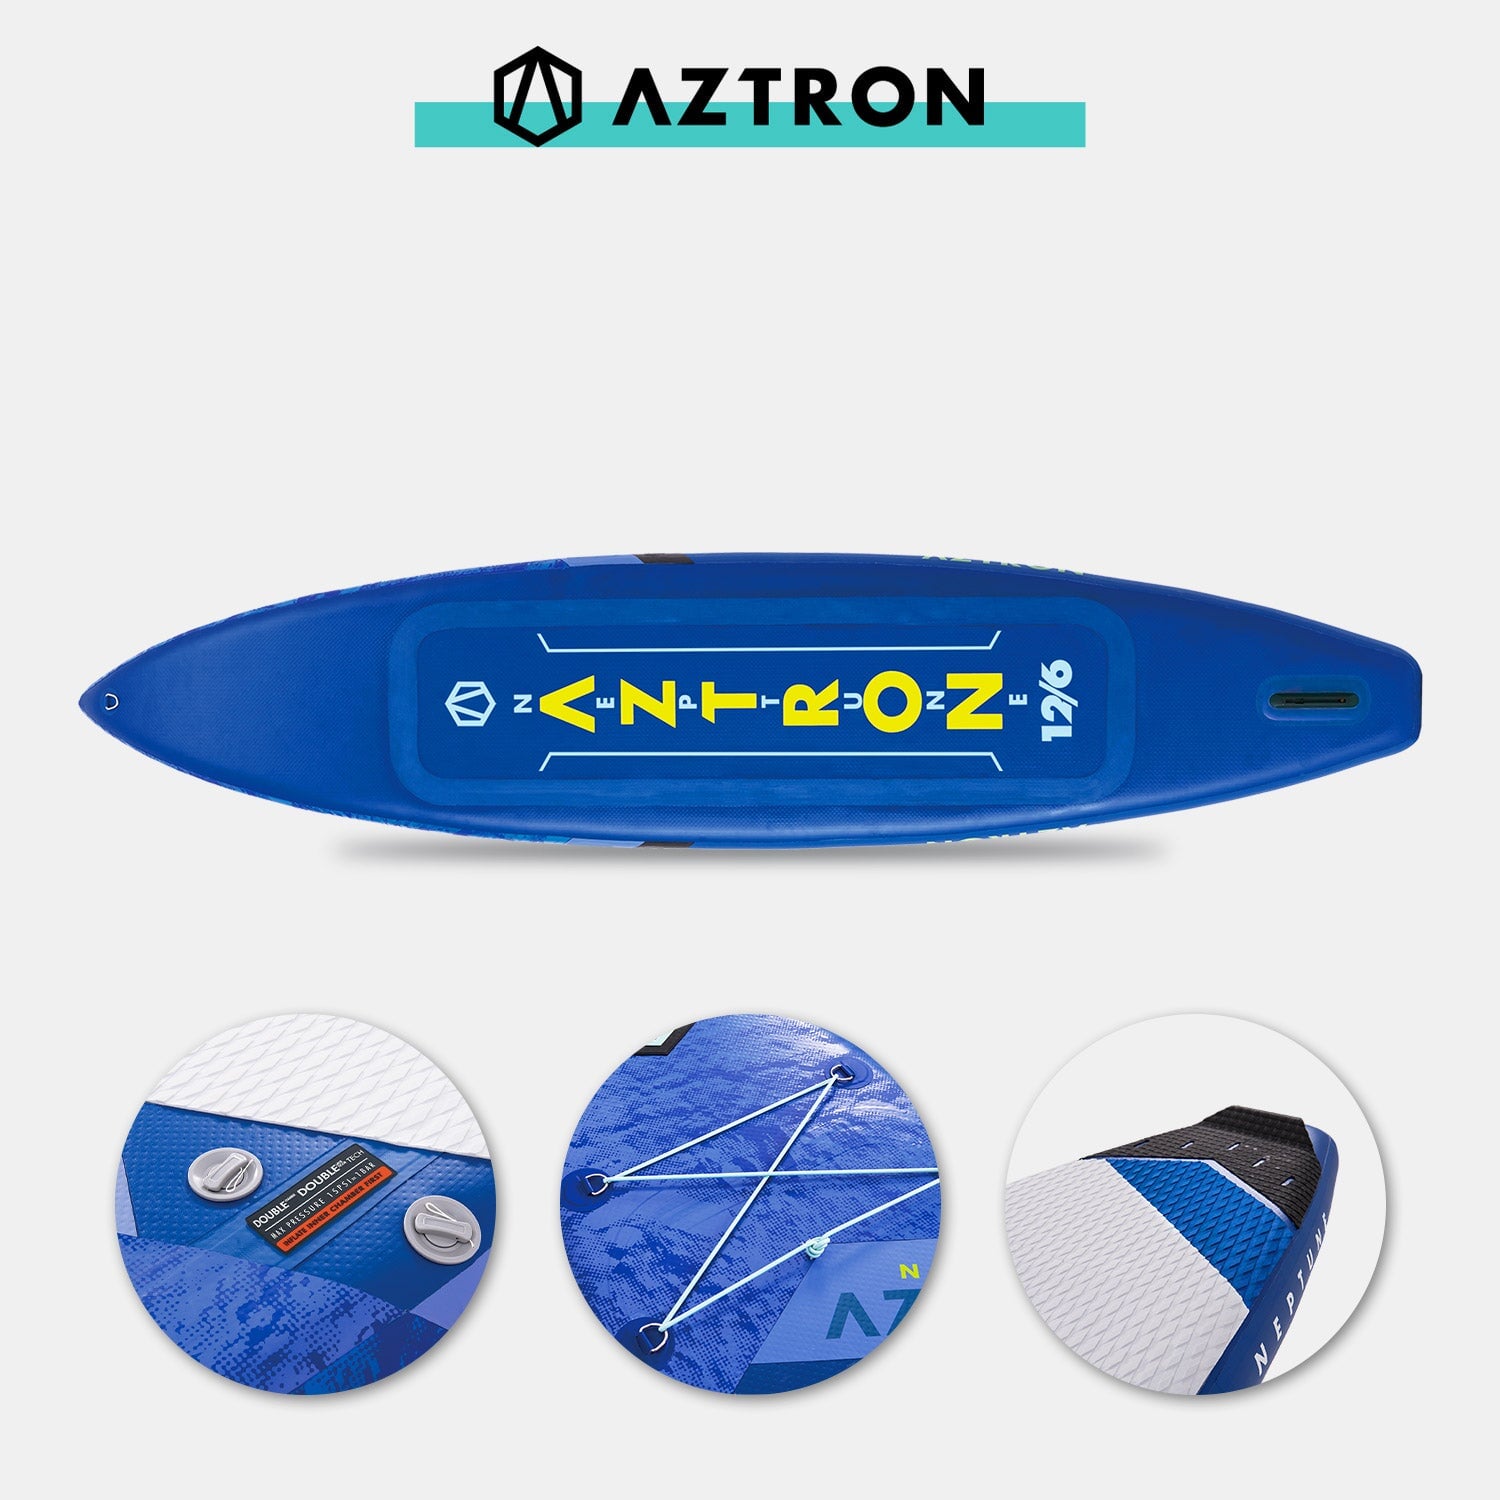 Set iSUP AZTRON Neptune Touring 12'6'', 381x81x15 cm, volume 339 litri